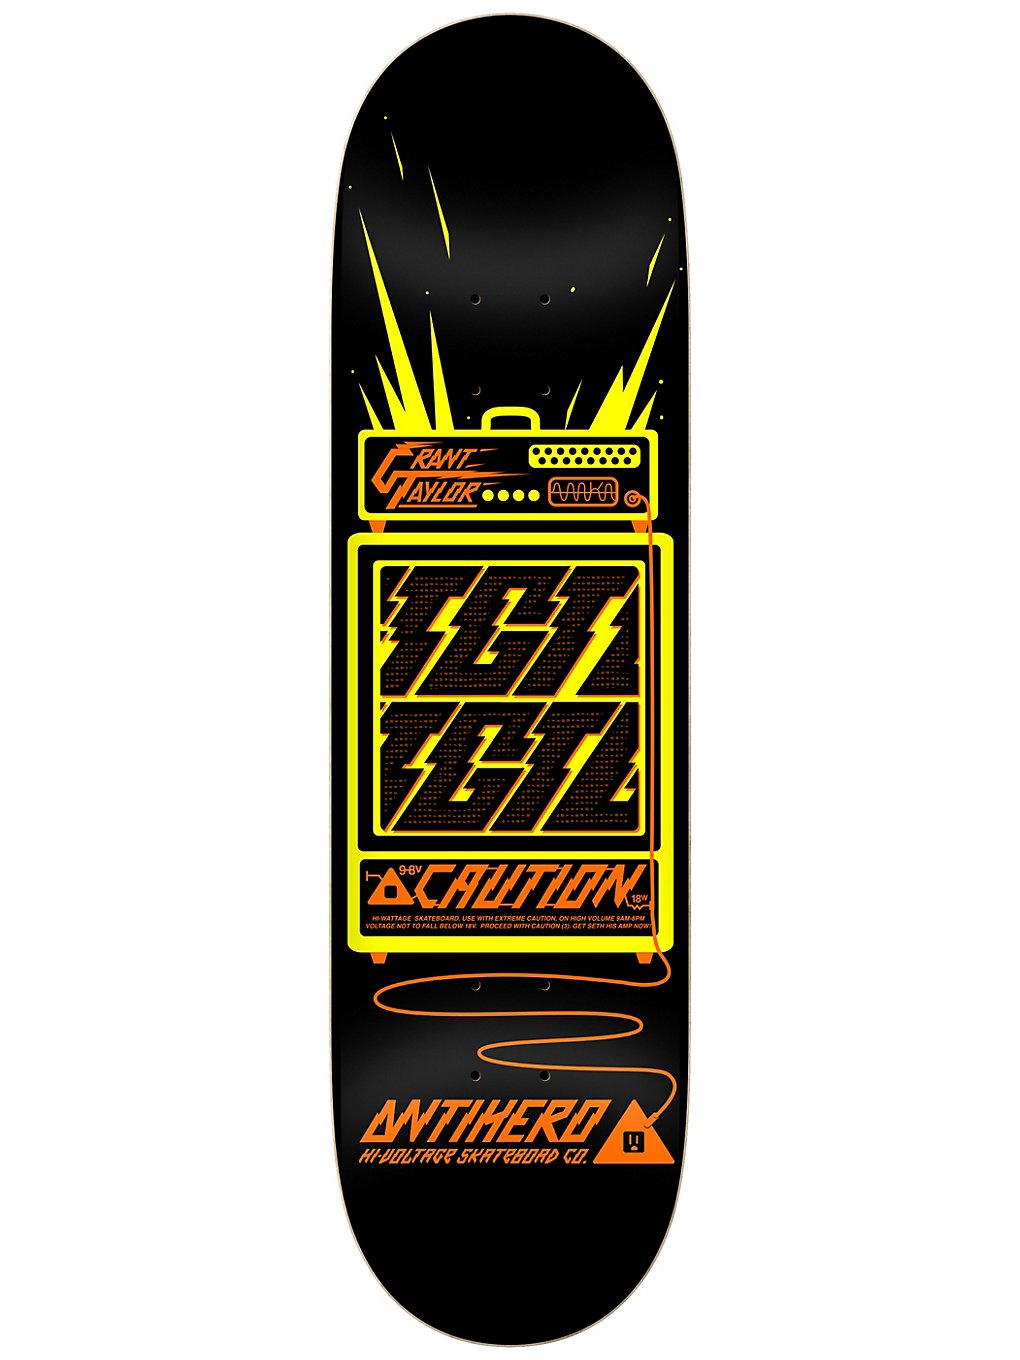 Antihero taylor high-voltage 9.0 skateboard deck kuviotu, antihero